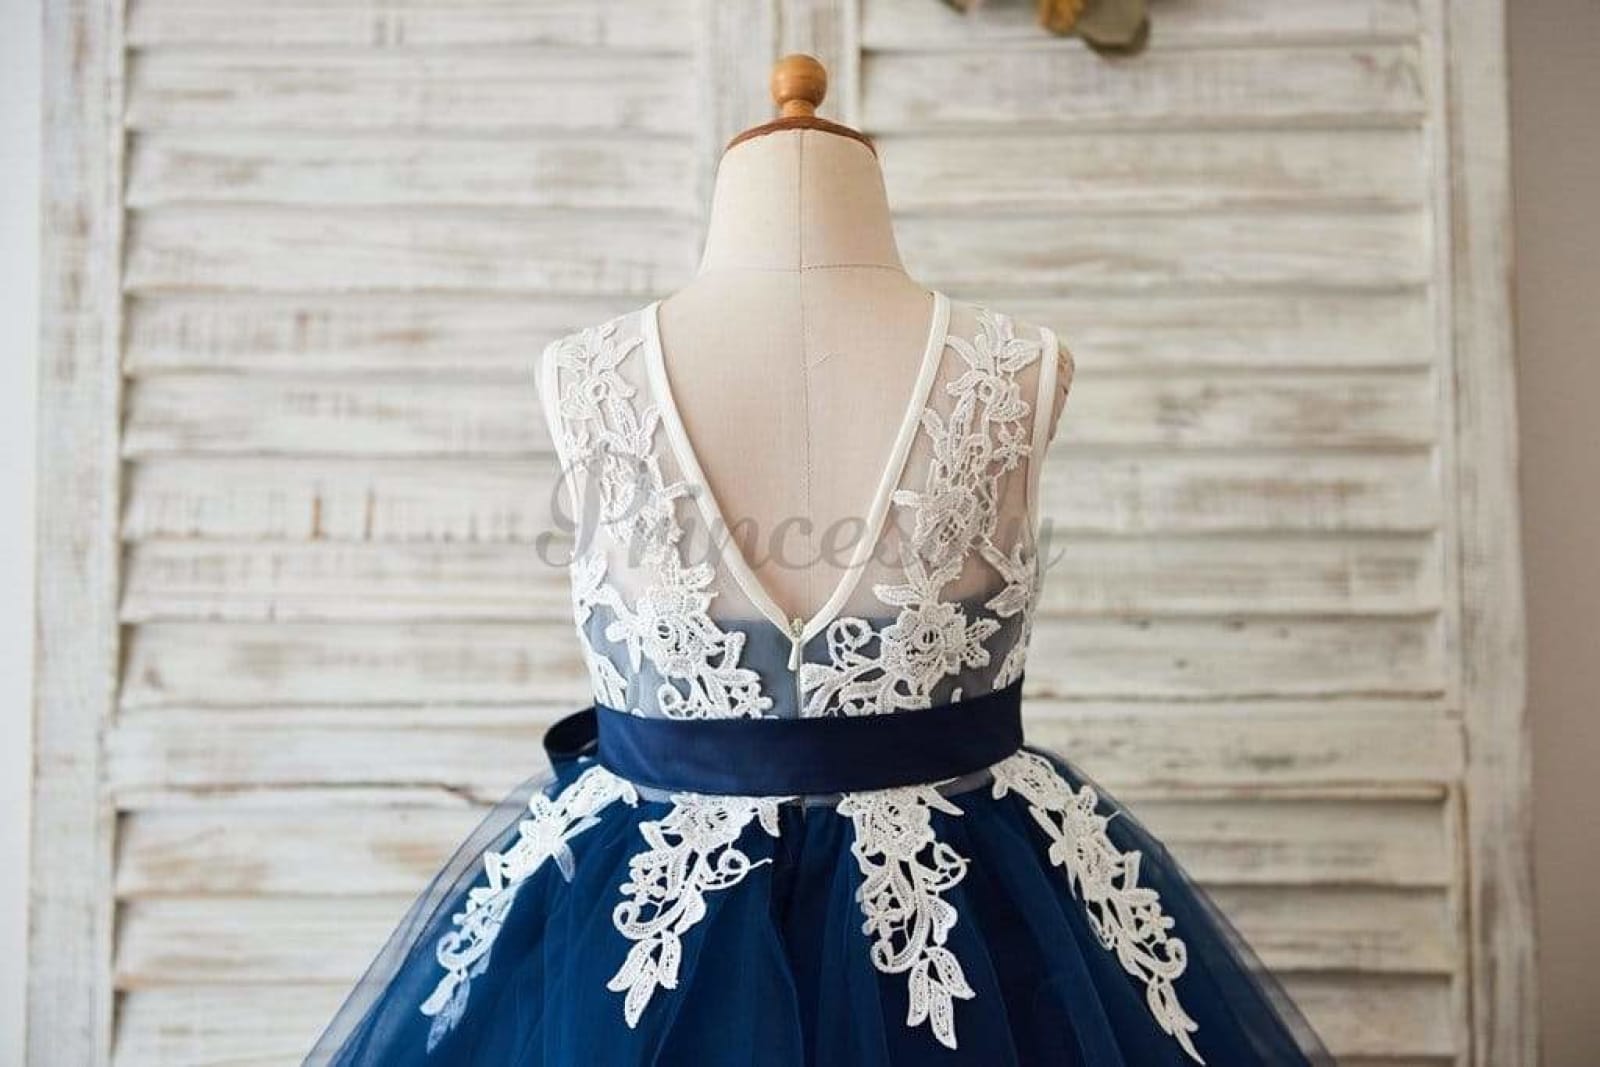 $79 SALE: Ivory Lace Navy Blue Tulle Wedding Flower Girl Dress with V Back